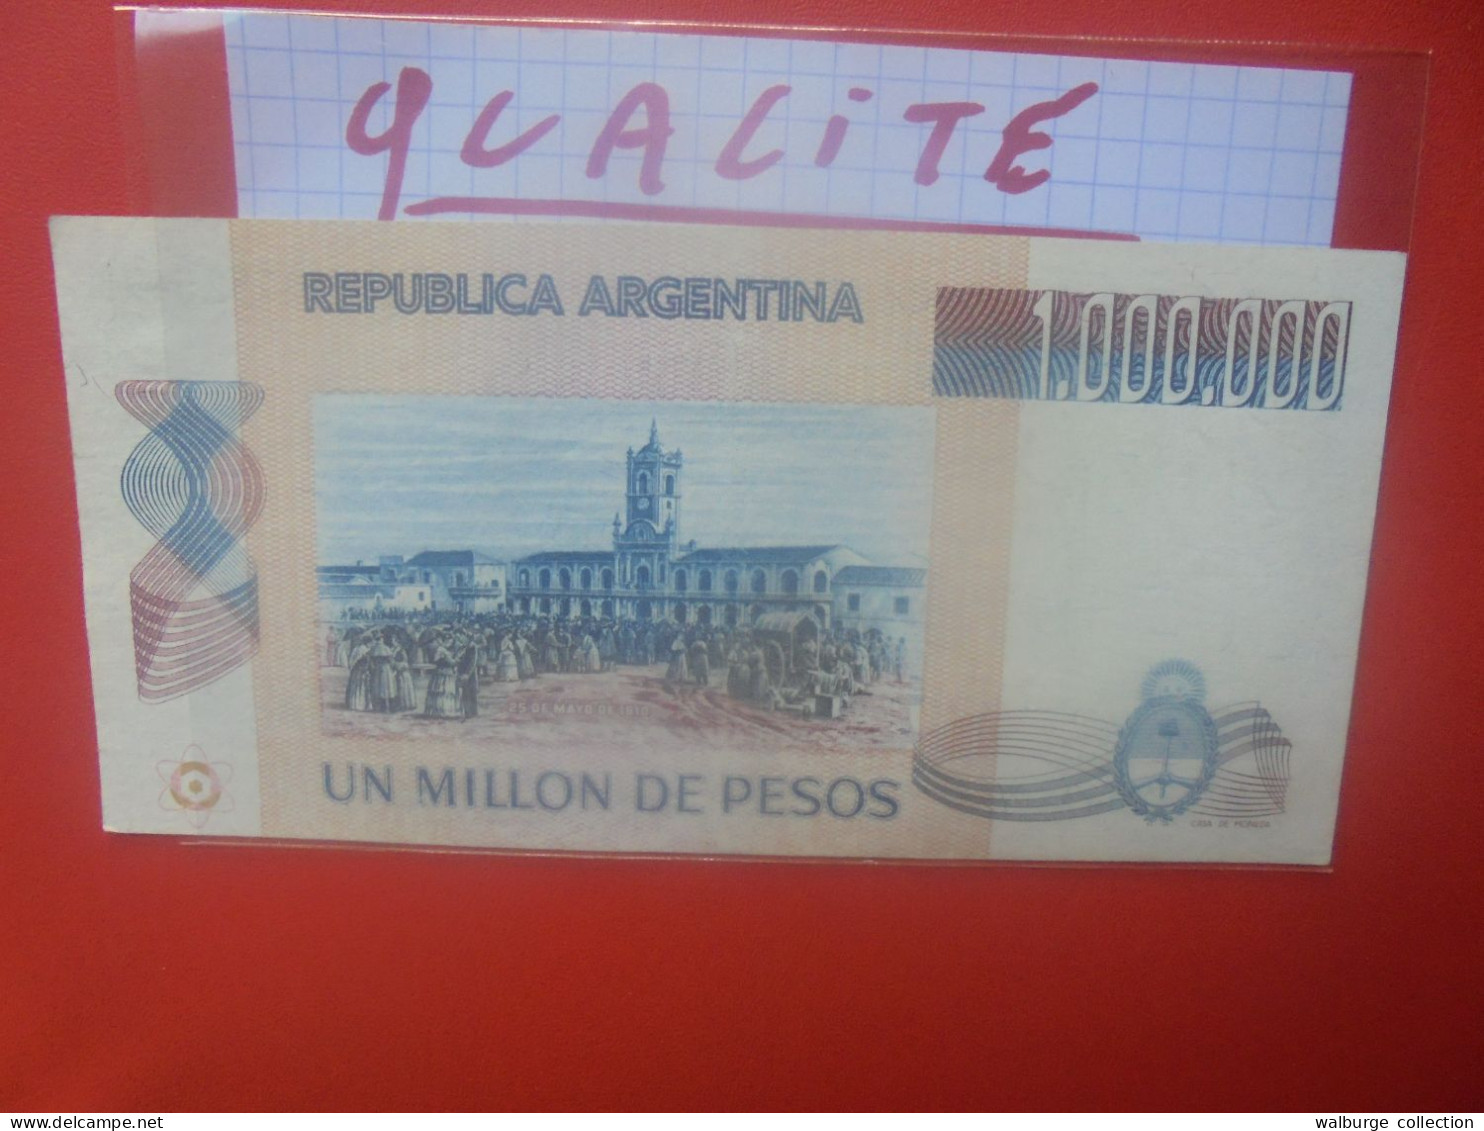 ARGENTINE 1.000.000 PESOS ND (1981-83) Circuler Belle Qualité (B.33) - Argentina